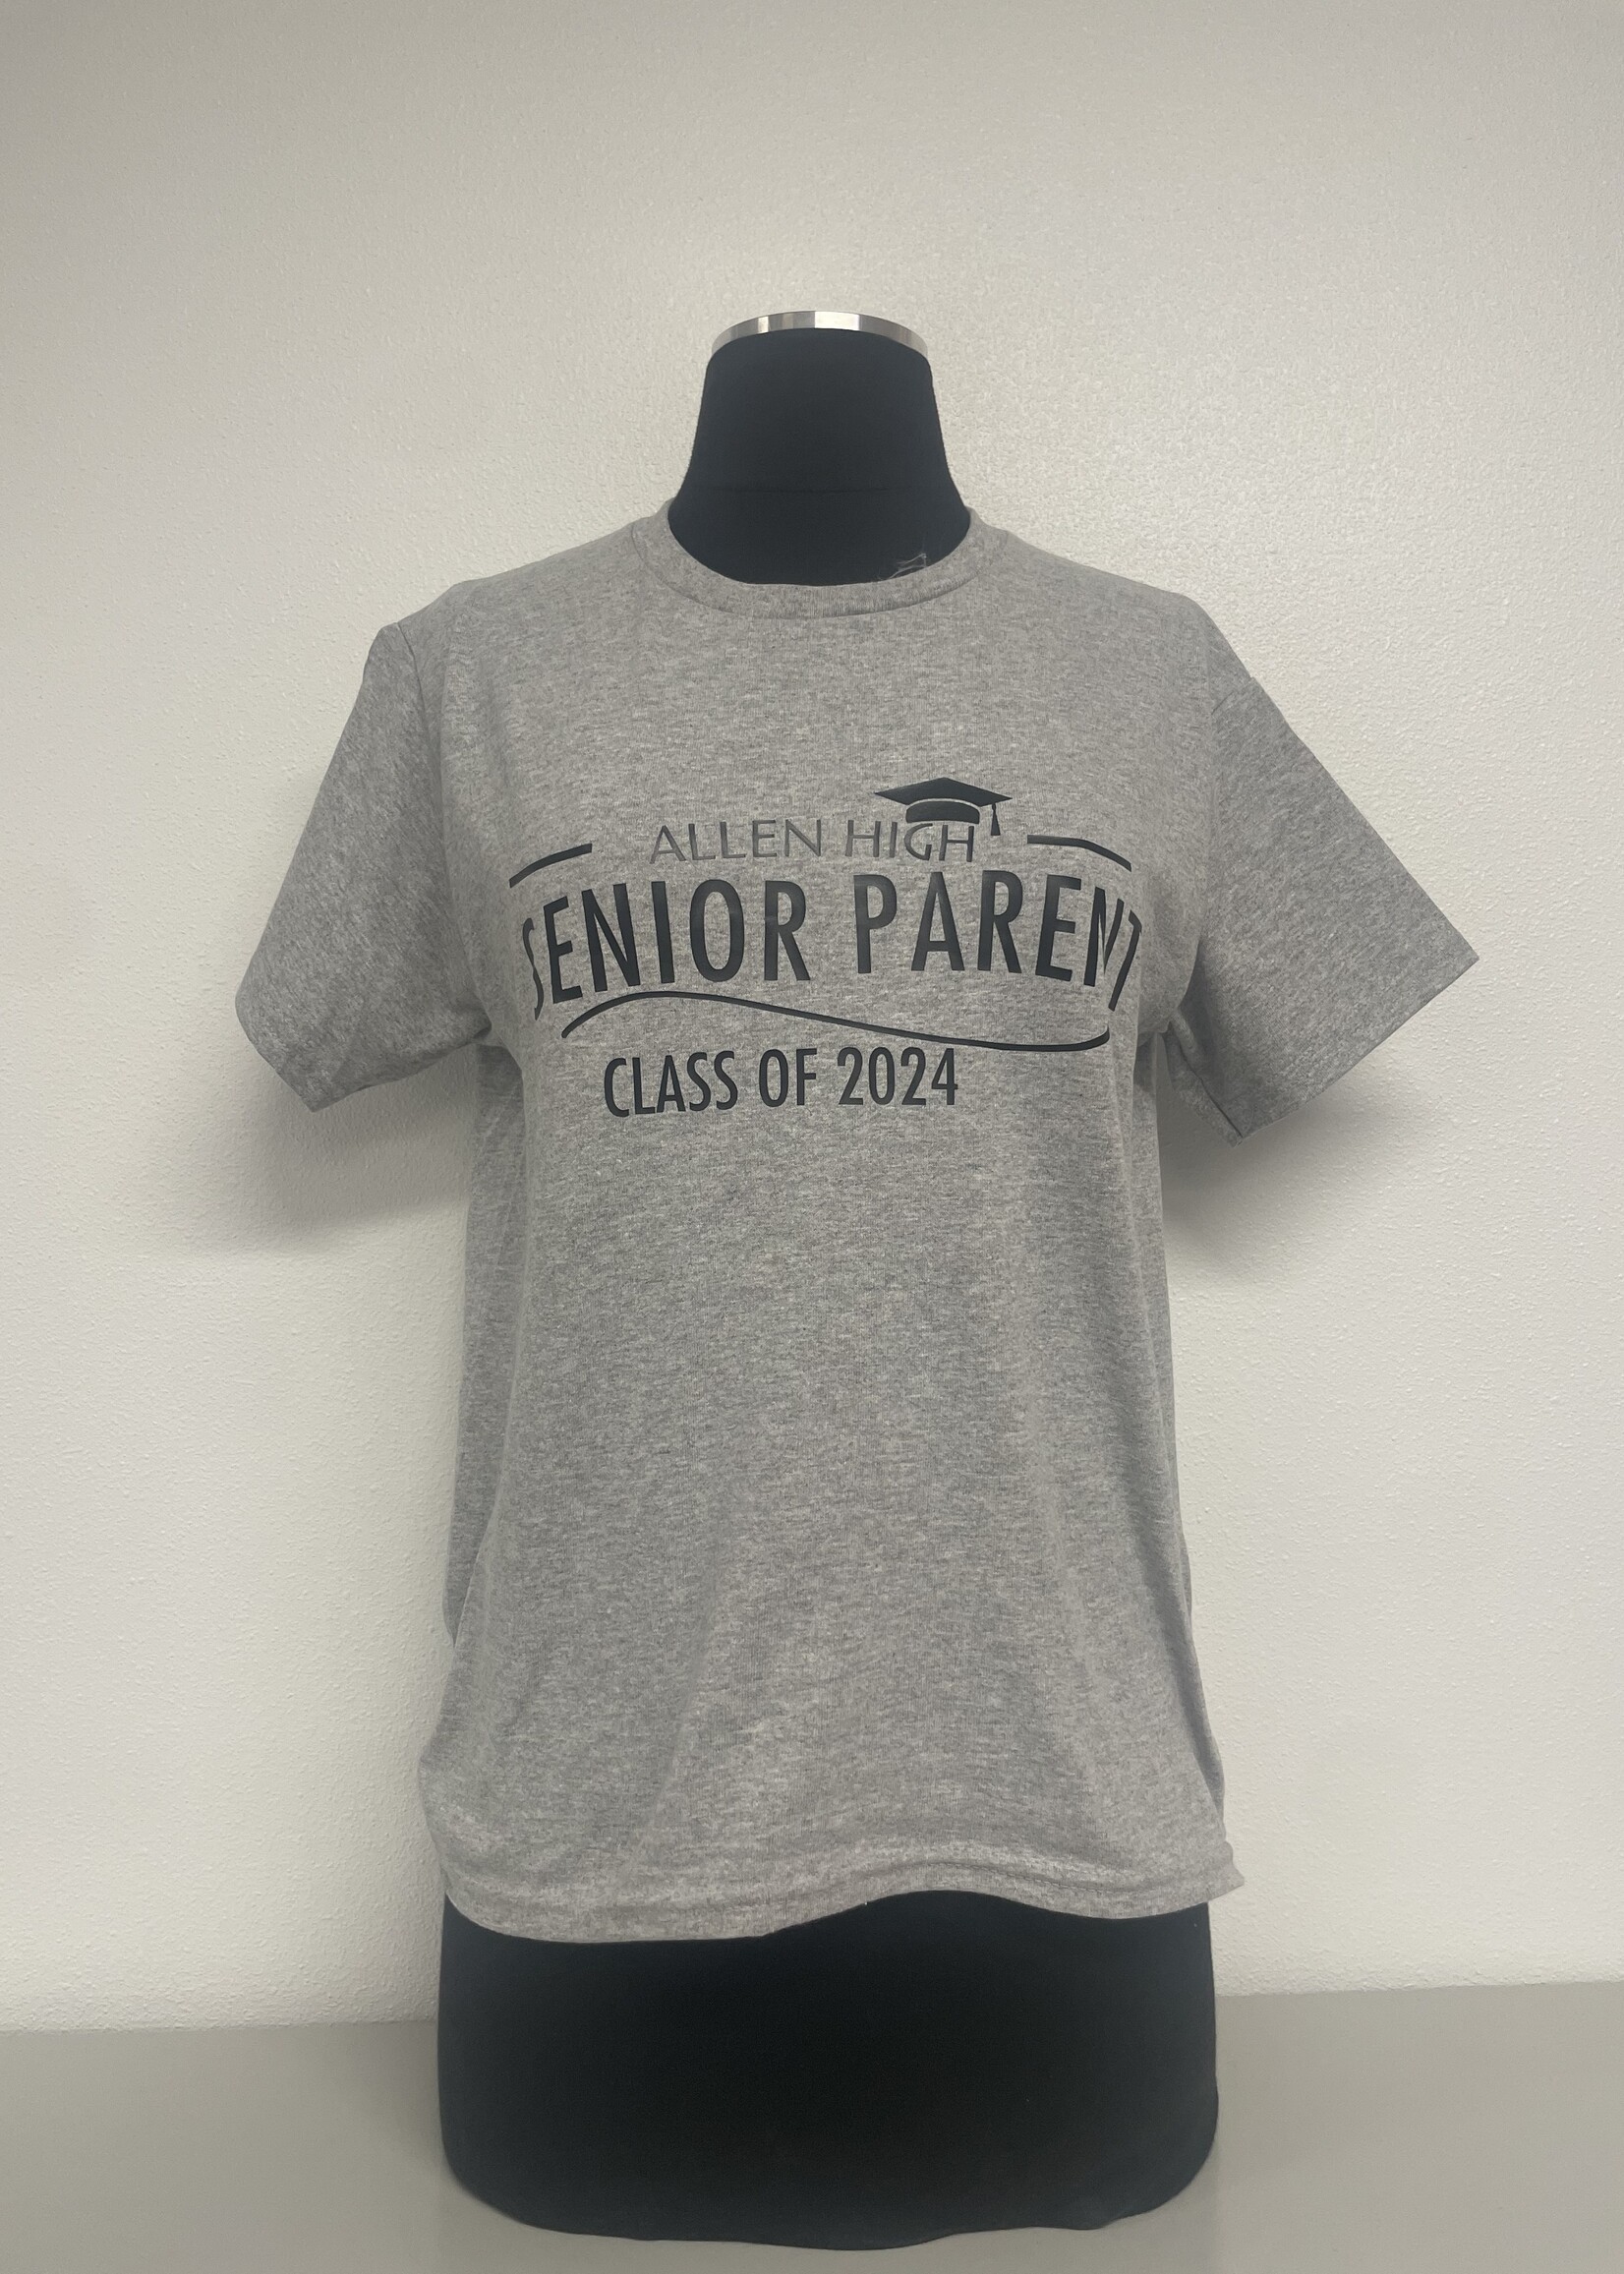 Senior Parent Shirt 2024